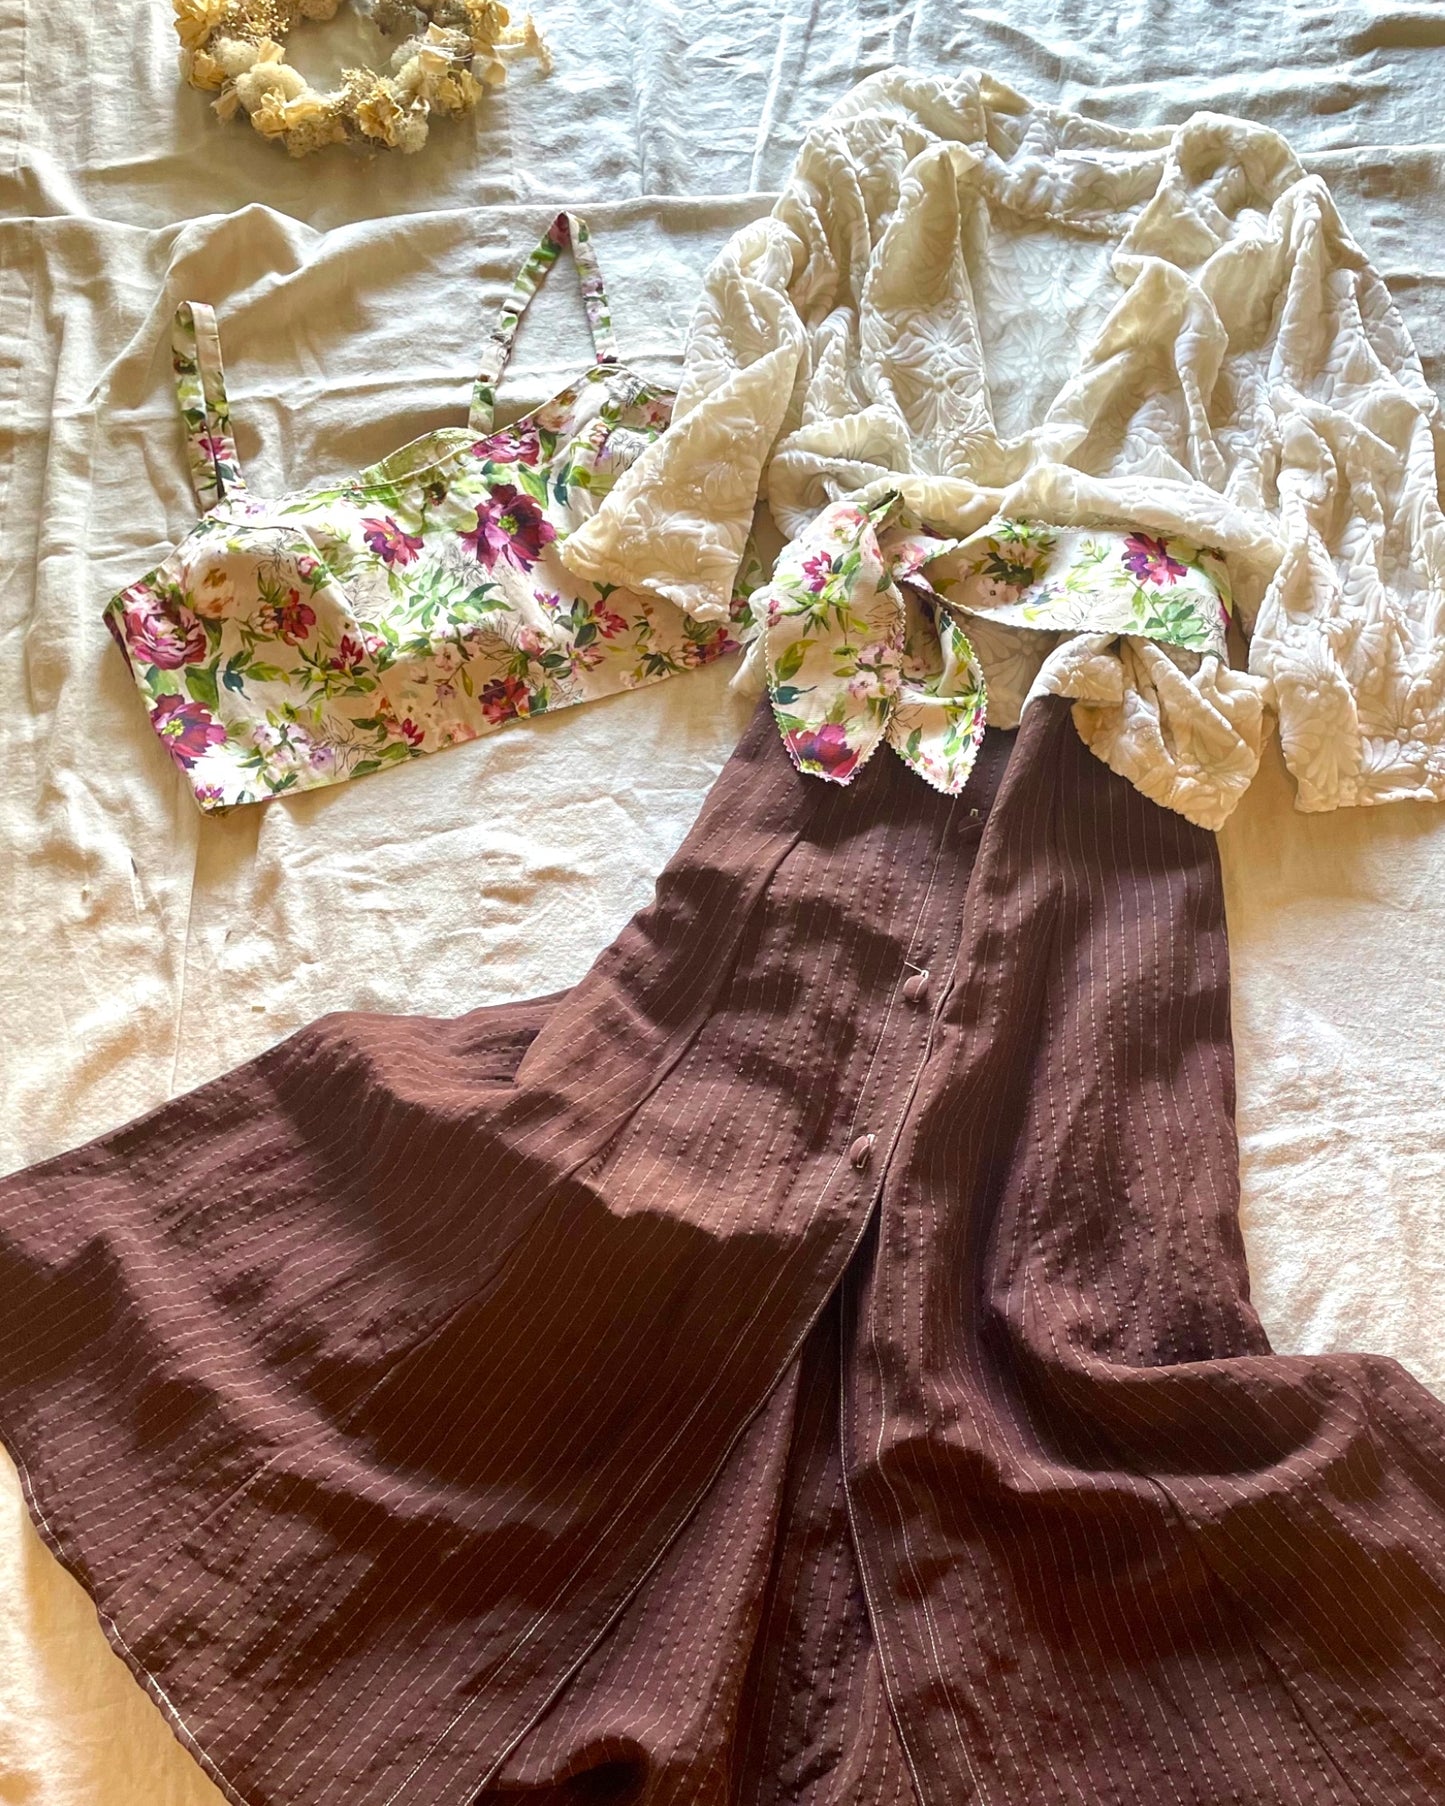 Prairie Skirt - Hickory Brown Linen